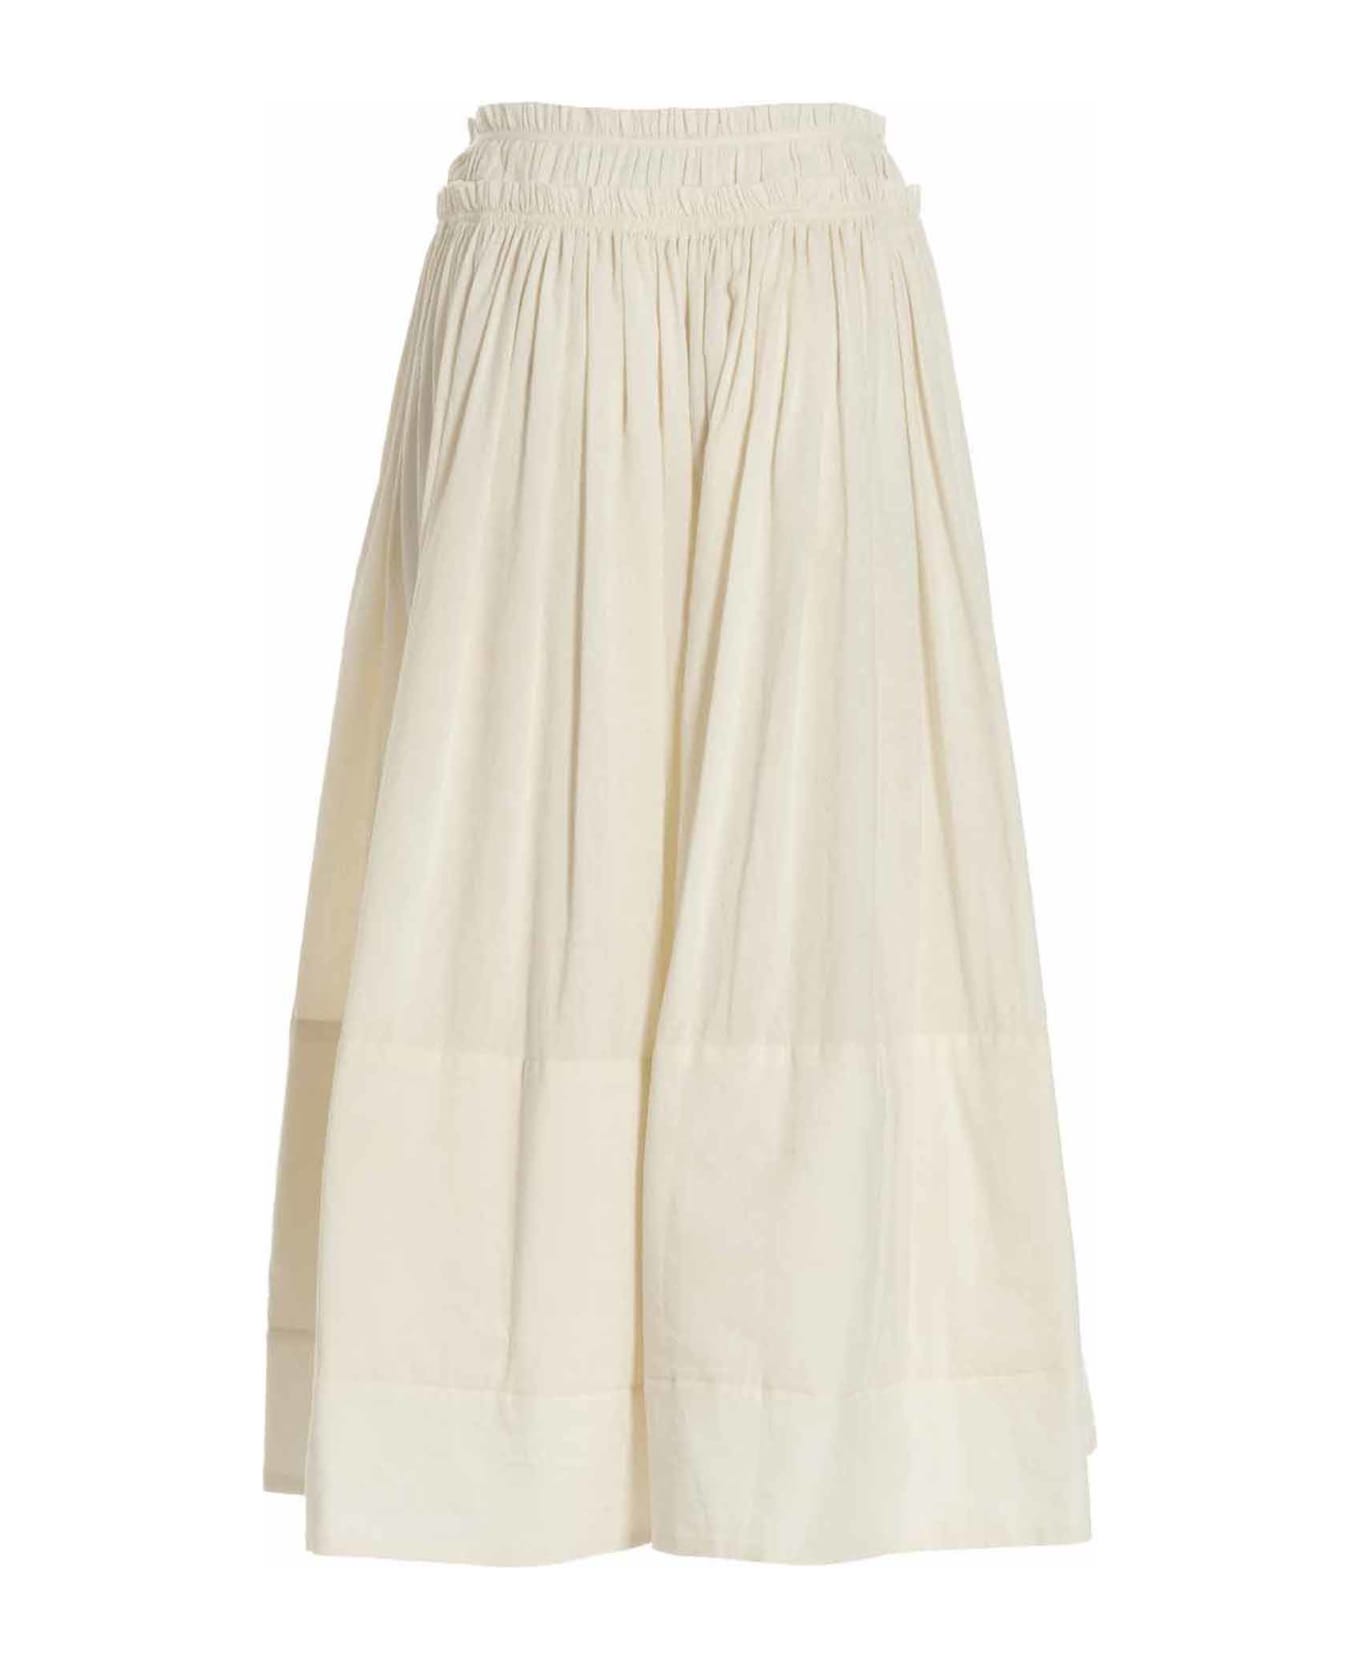 Tory Burch 'rouched Waist' Skirt - White スカート